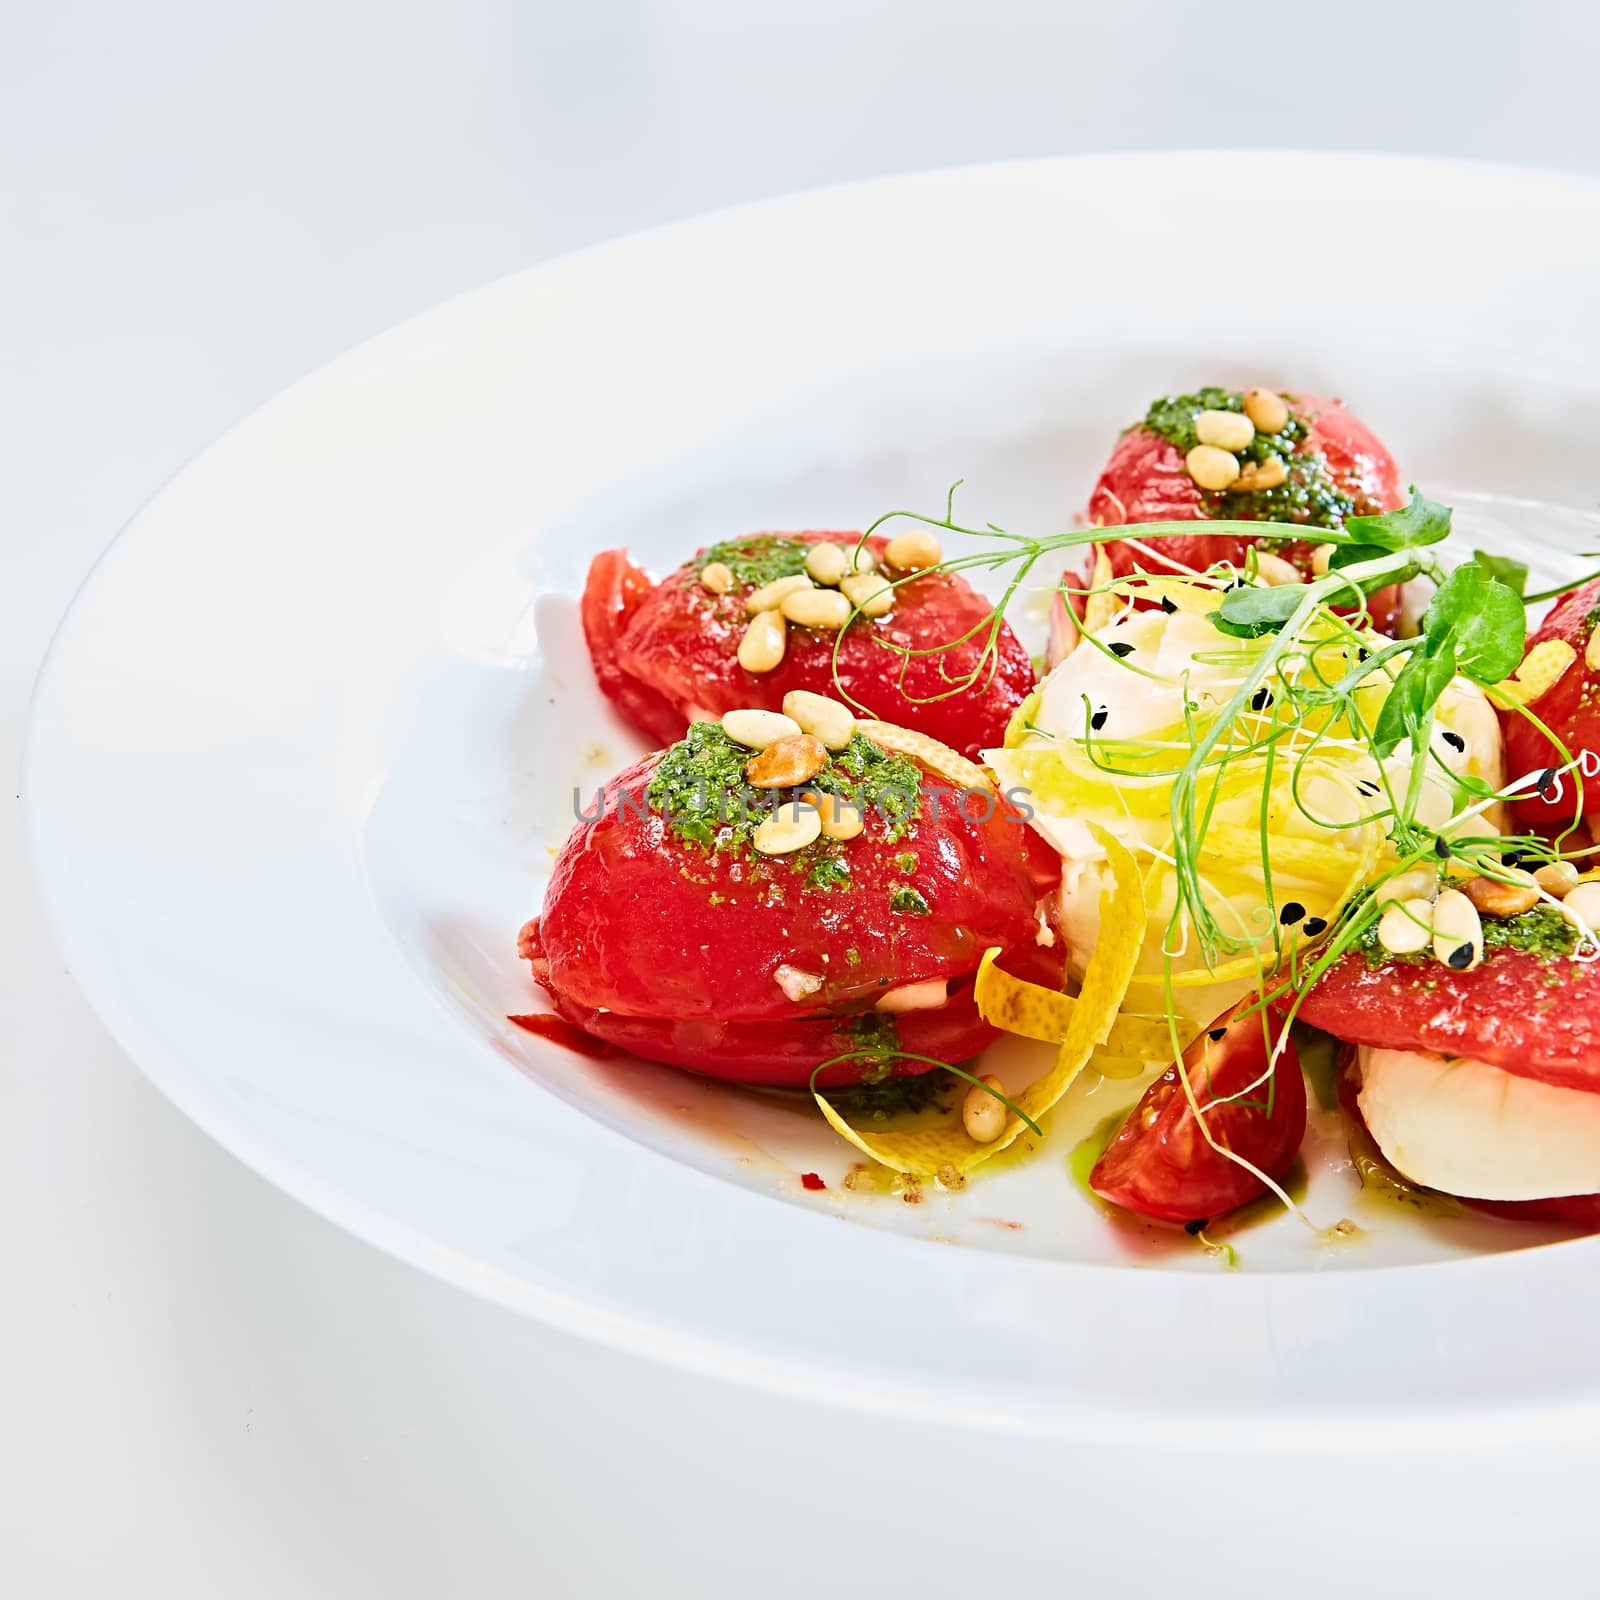 Mozzarella and tomato salad - caprese on the white plate. Shallow dof.